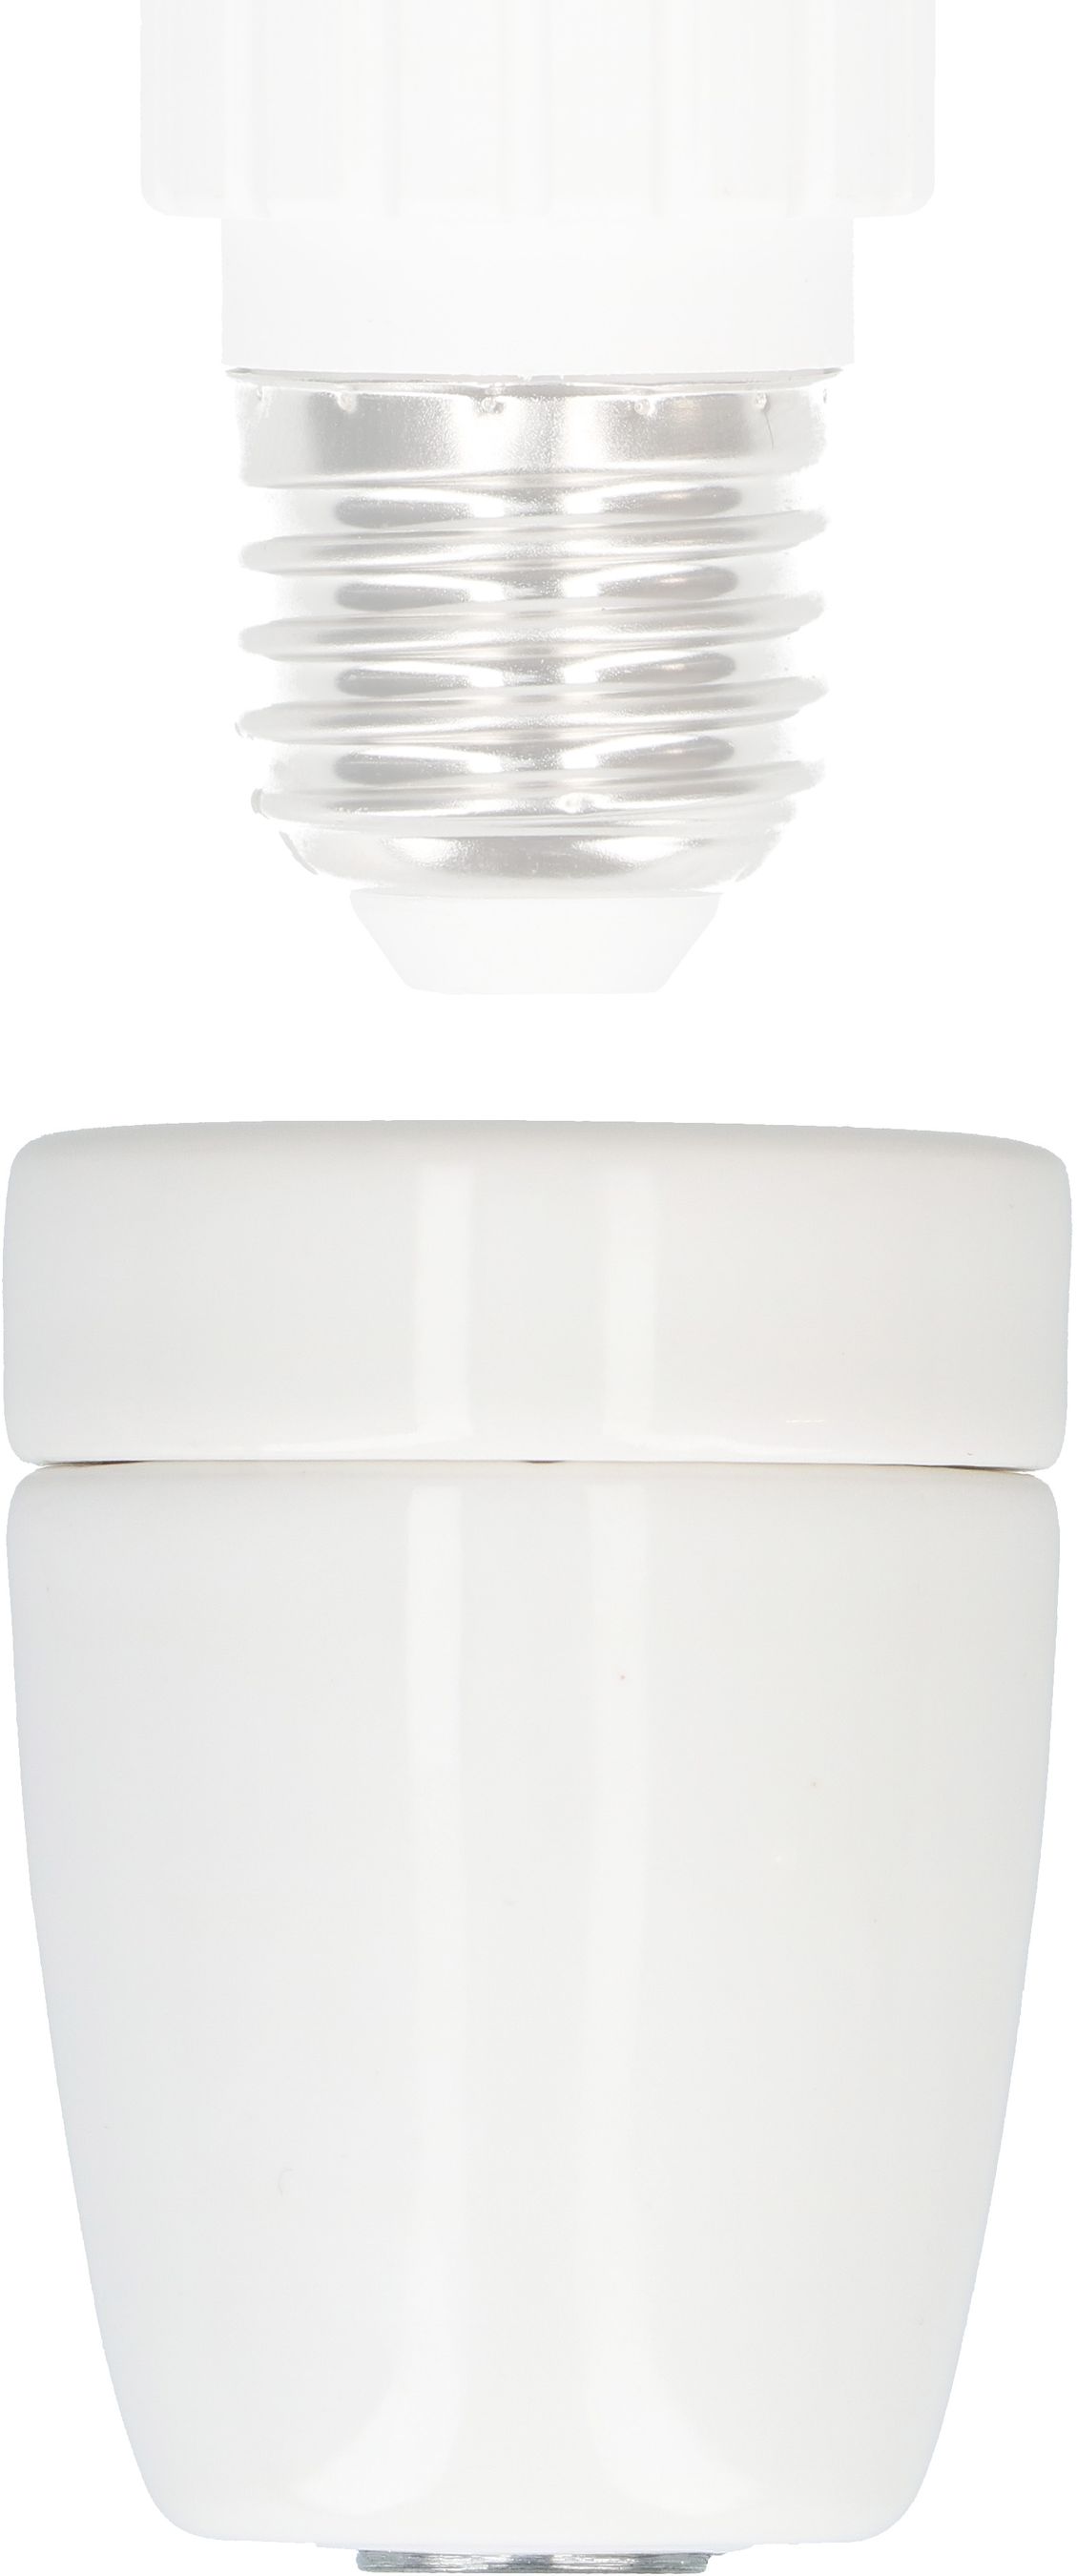 E27 Socket porcelain M10x1 / Colour: white